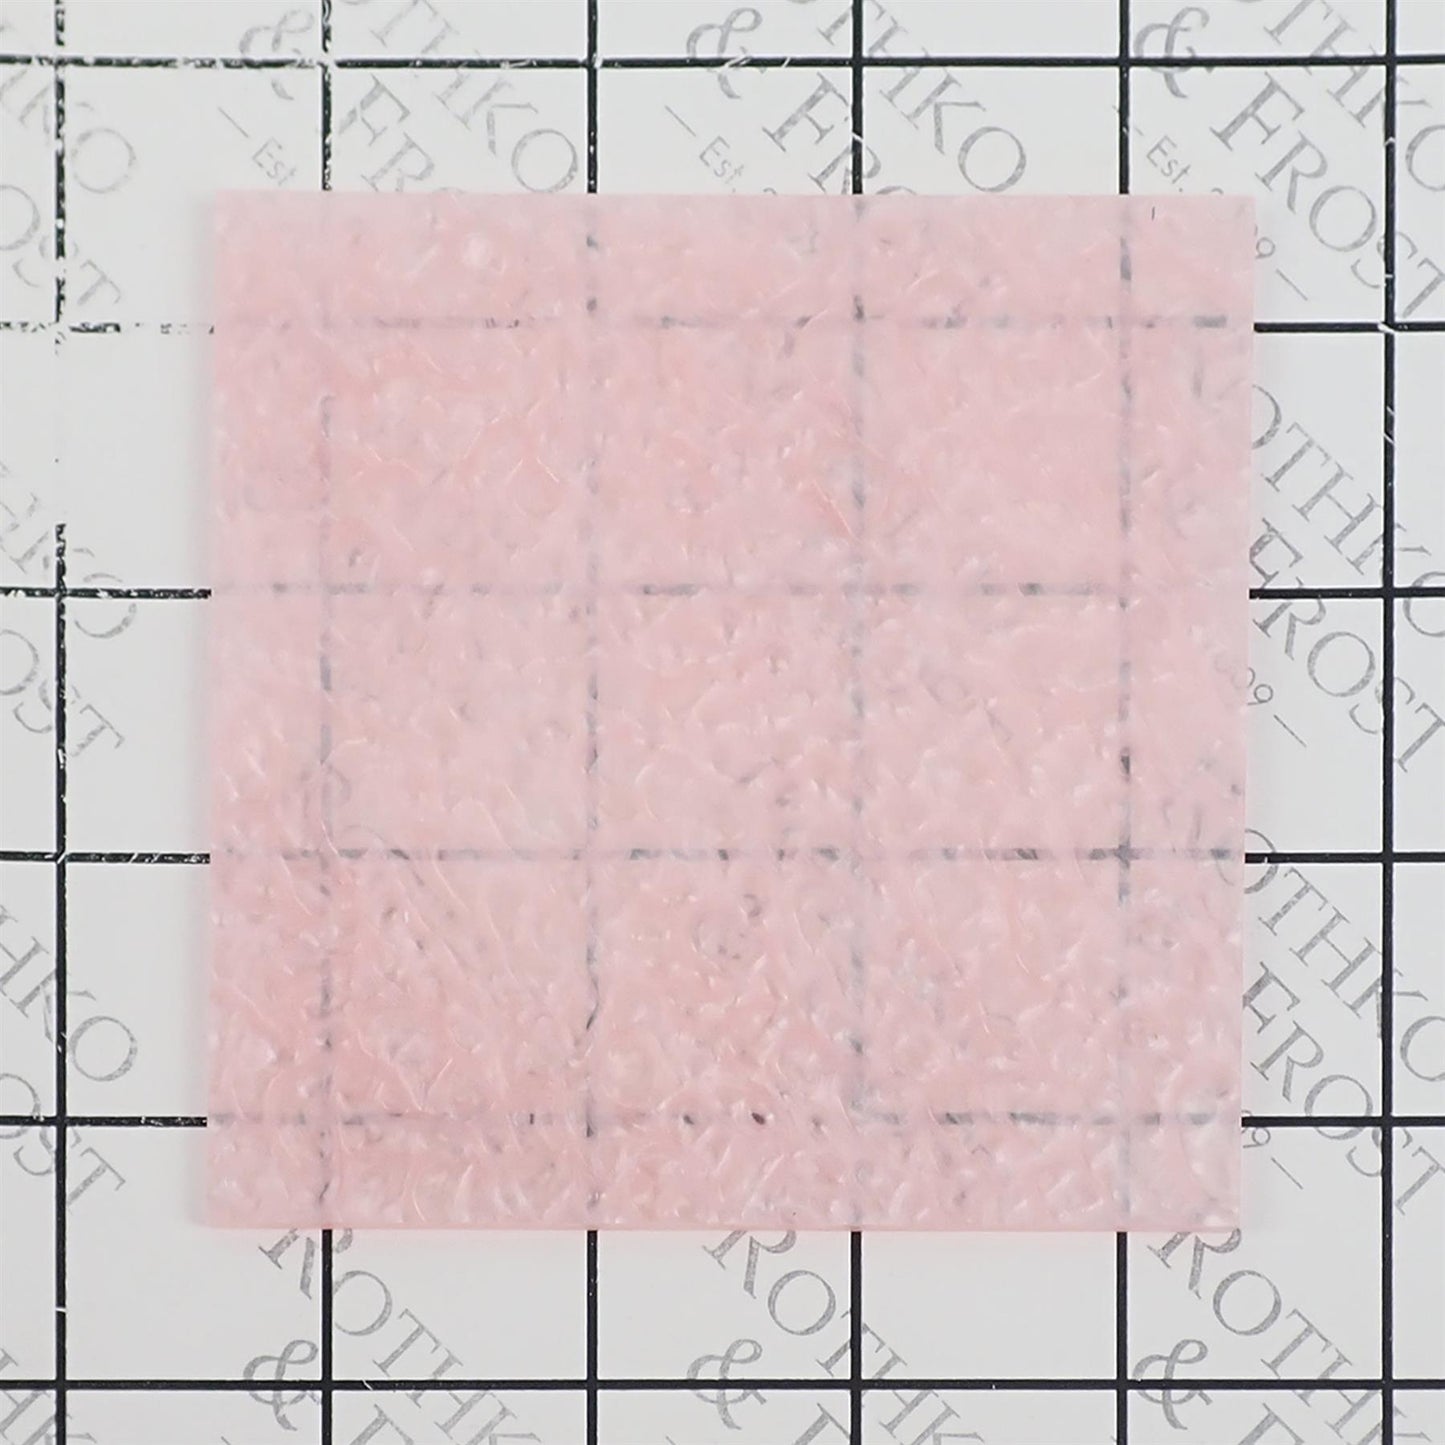 Incudo Baby Pink Lava Pearl Acrylic Sheet - 300x200x3mm (11.8x7.87x0.12")